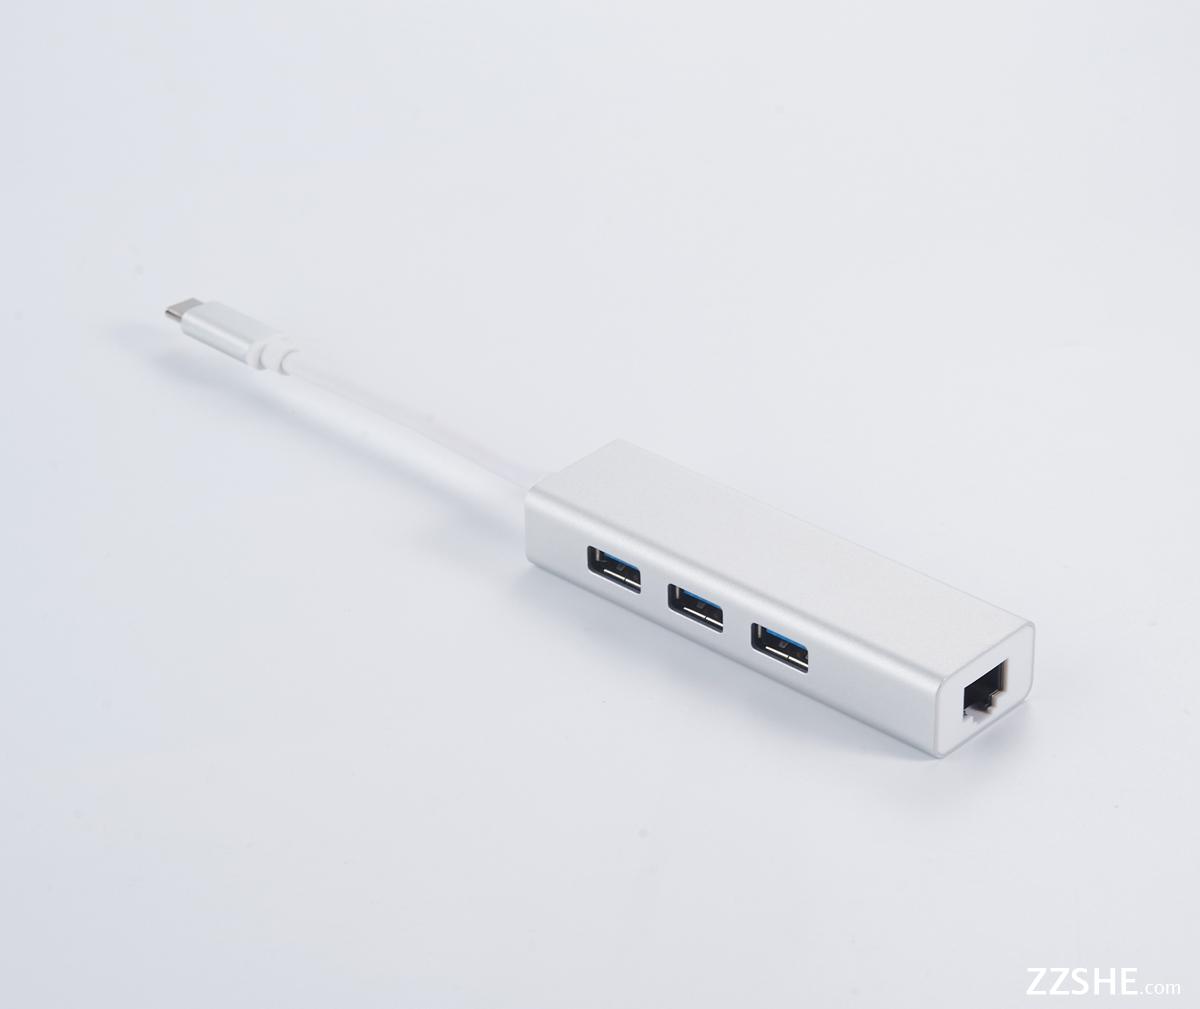 USB-C to Gigabit Ethernet USB A 3.0 Adapter Hub 